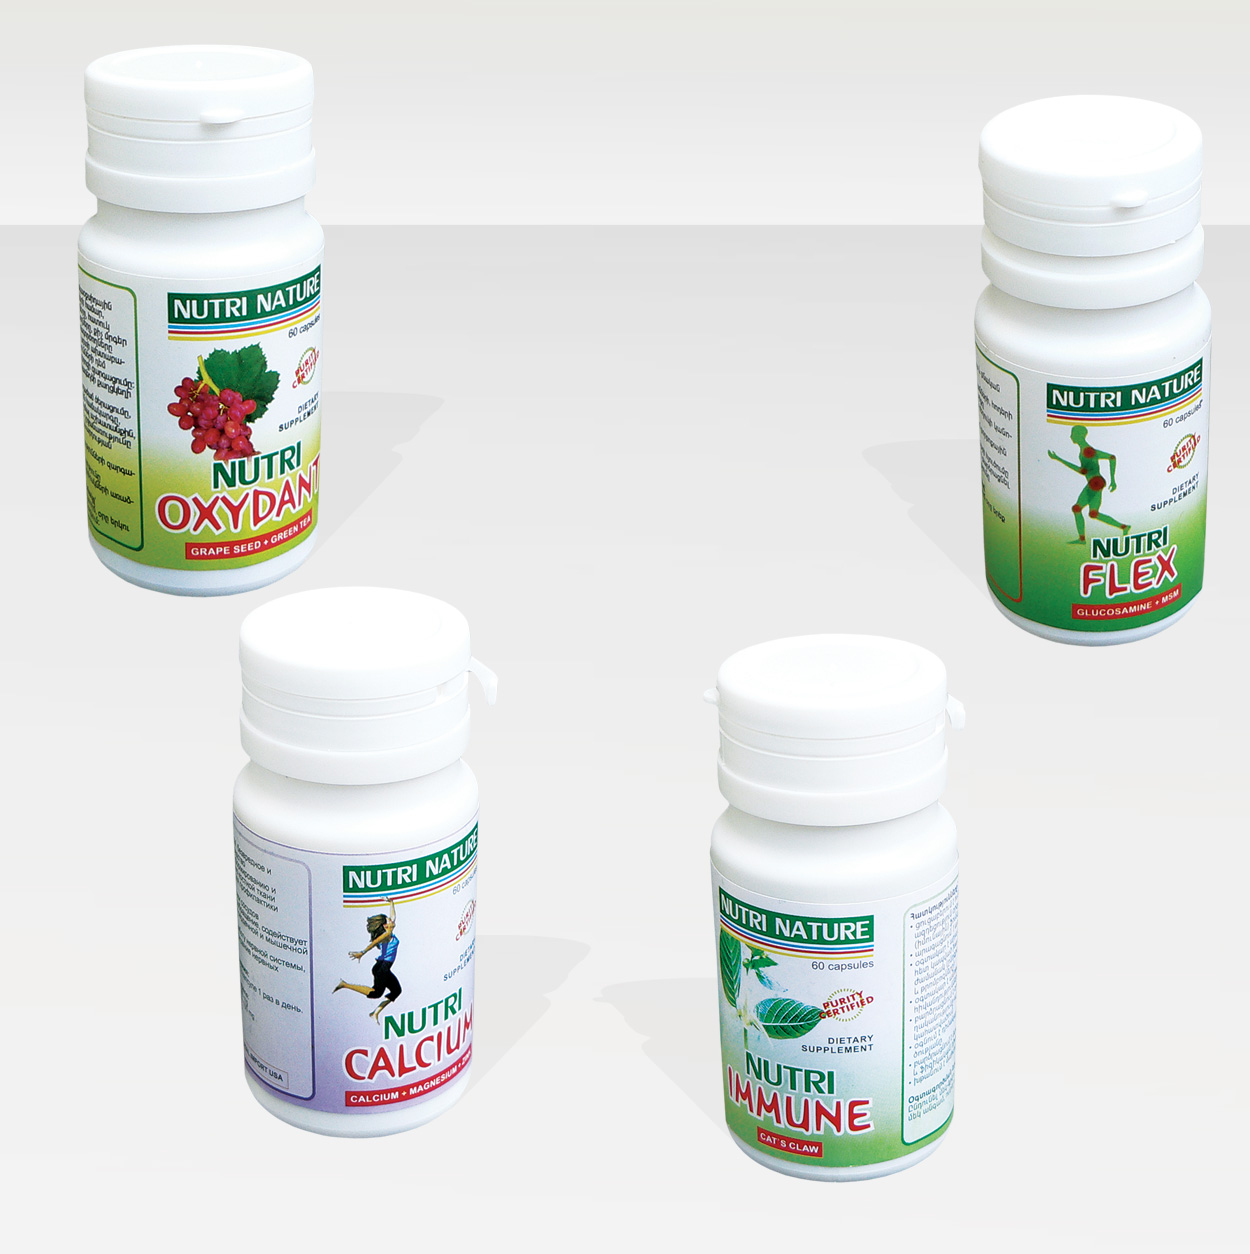 Nutri Nature-Dietary Supplements: Label Design